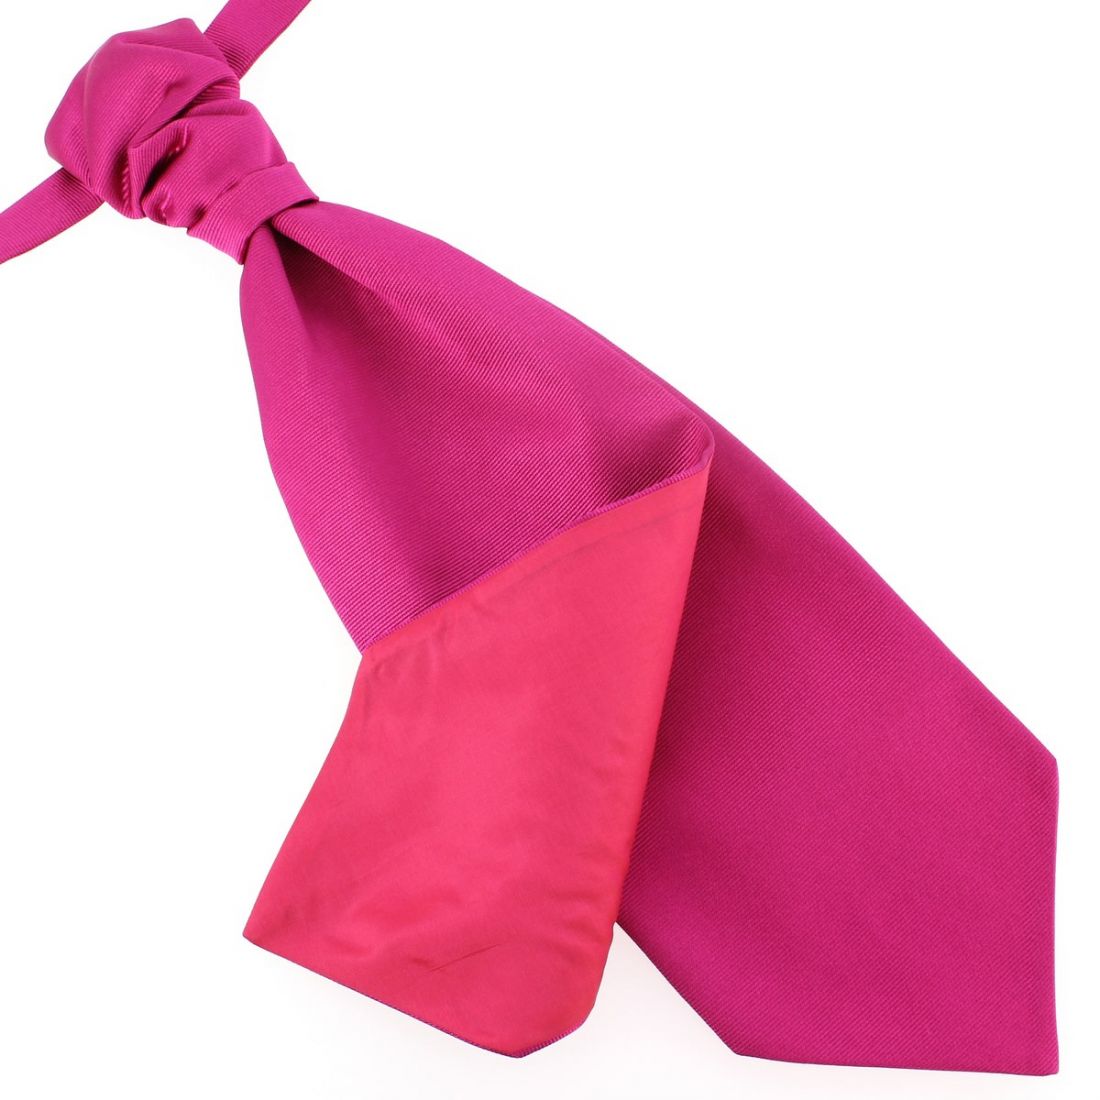 Tony & paul. lavalier ceremonial. figaro, silk. pink, uni. | eBay